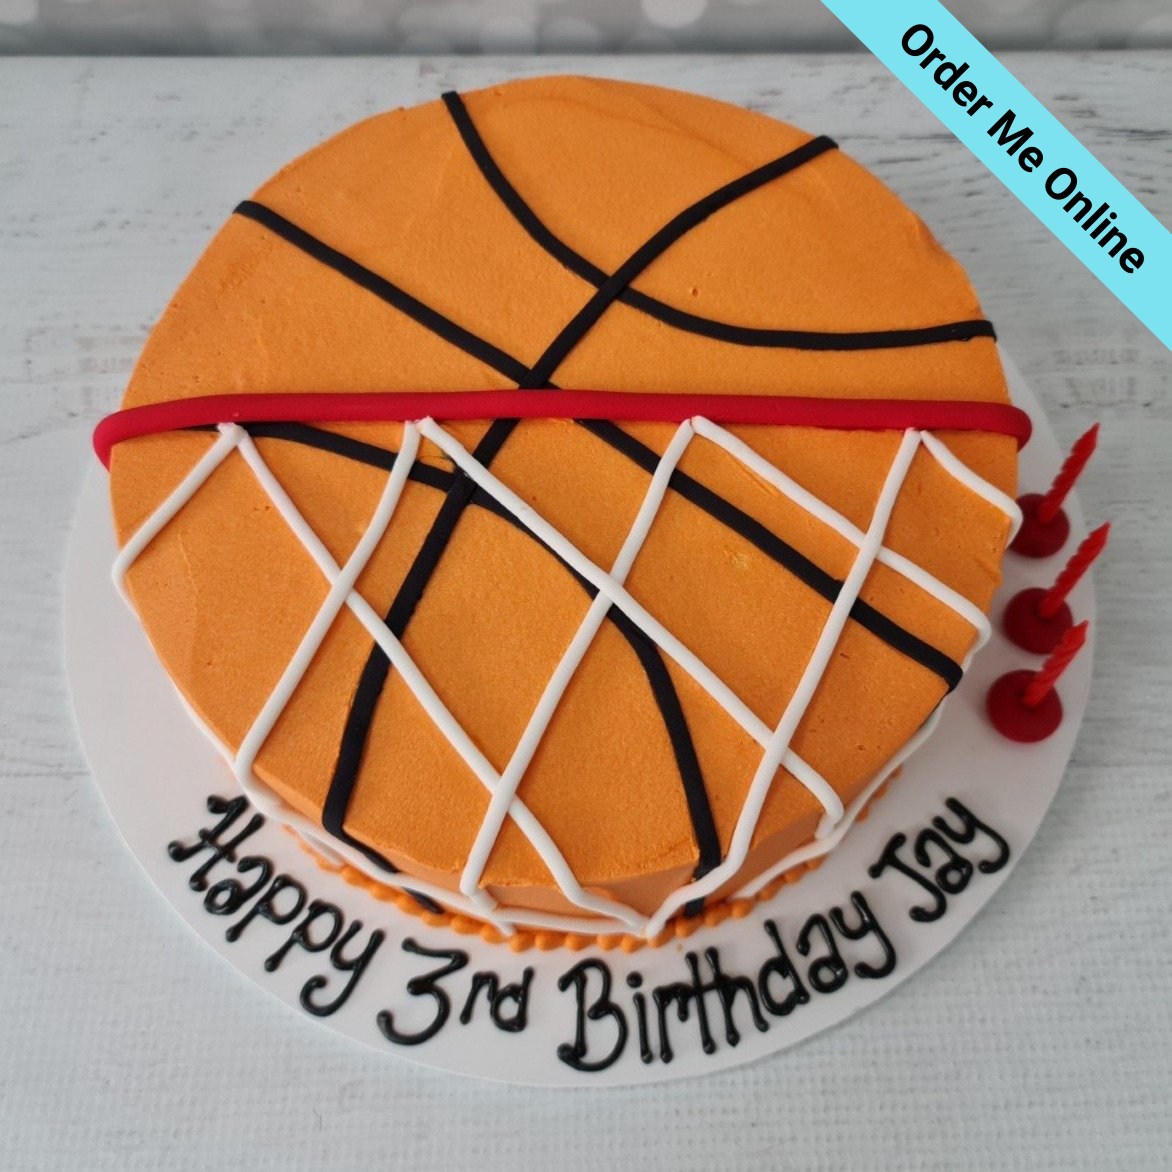 5oth birthday cake - Jay Jay Cakes and Wedding Decoration | Facebook